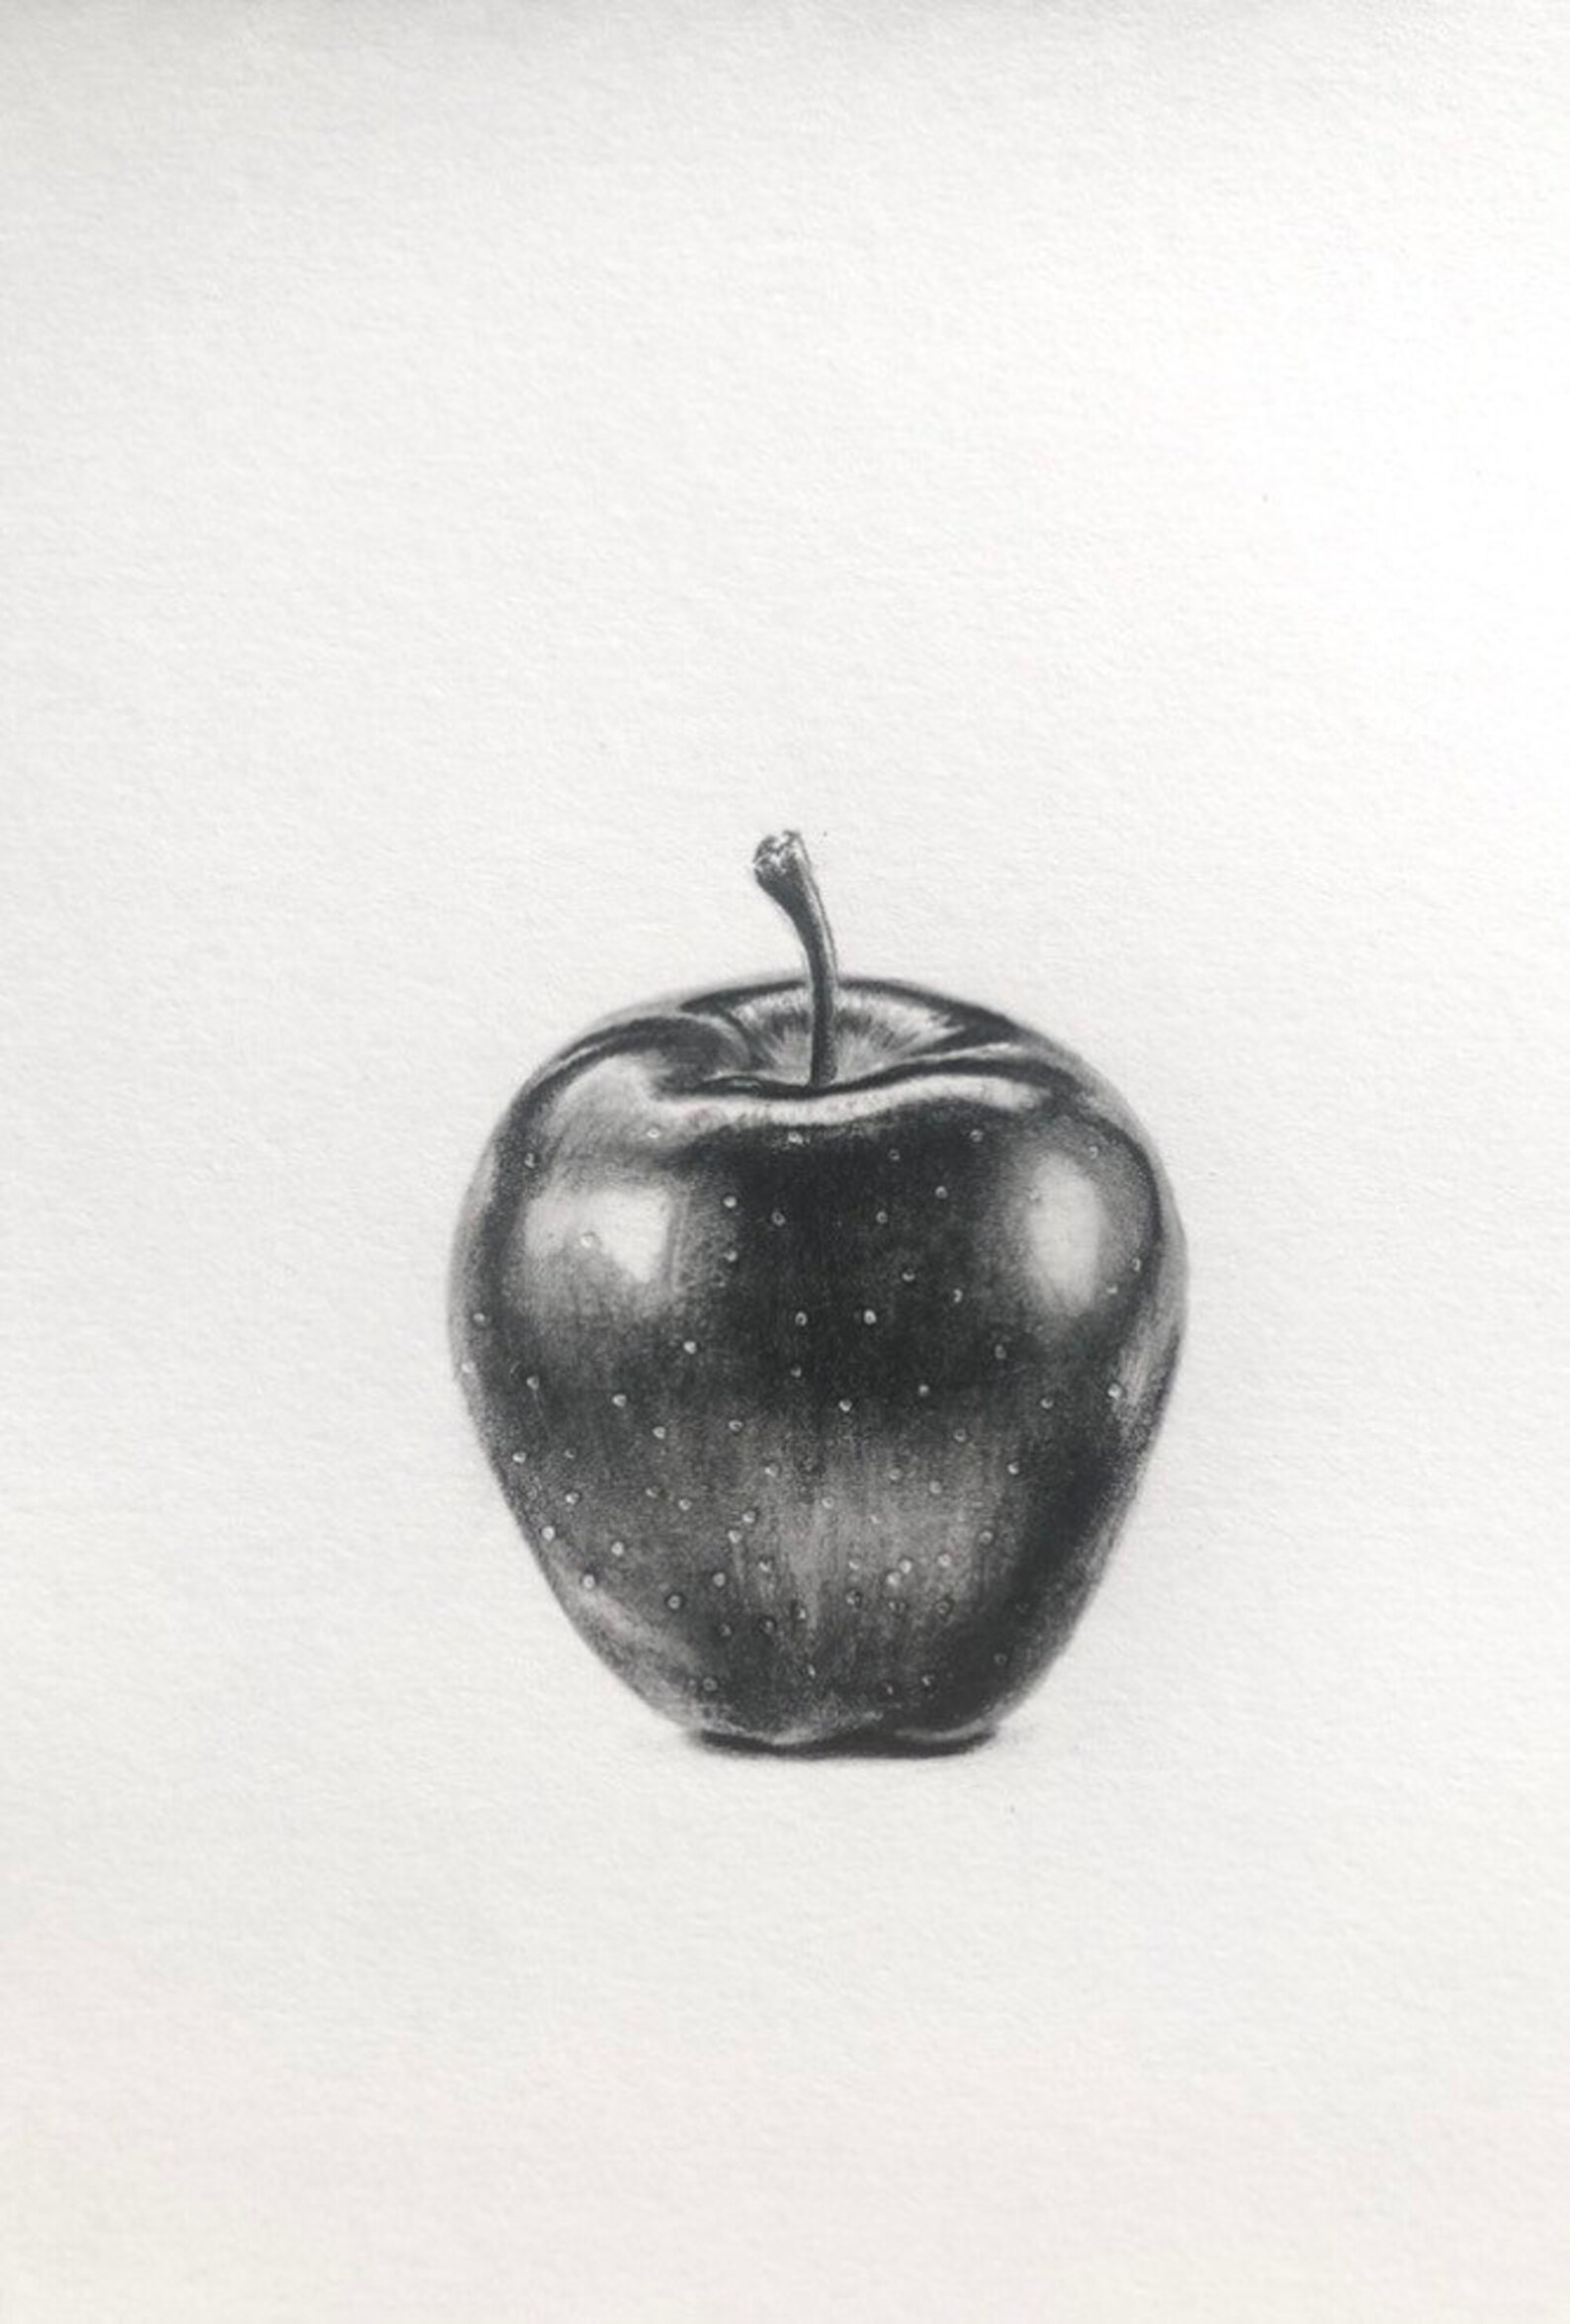 Printable Red Applepencil Drawing . Original Art 